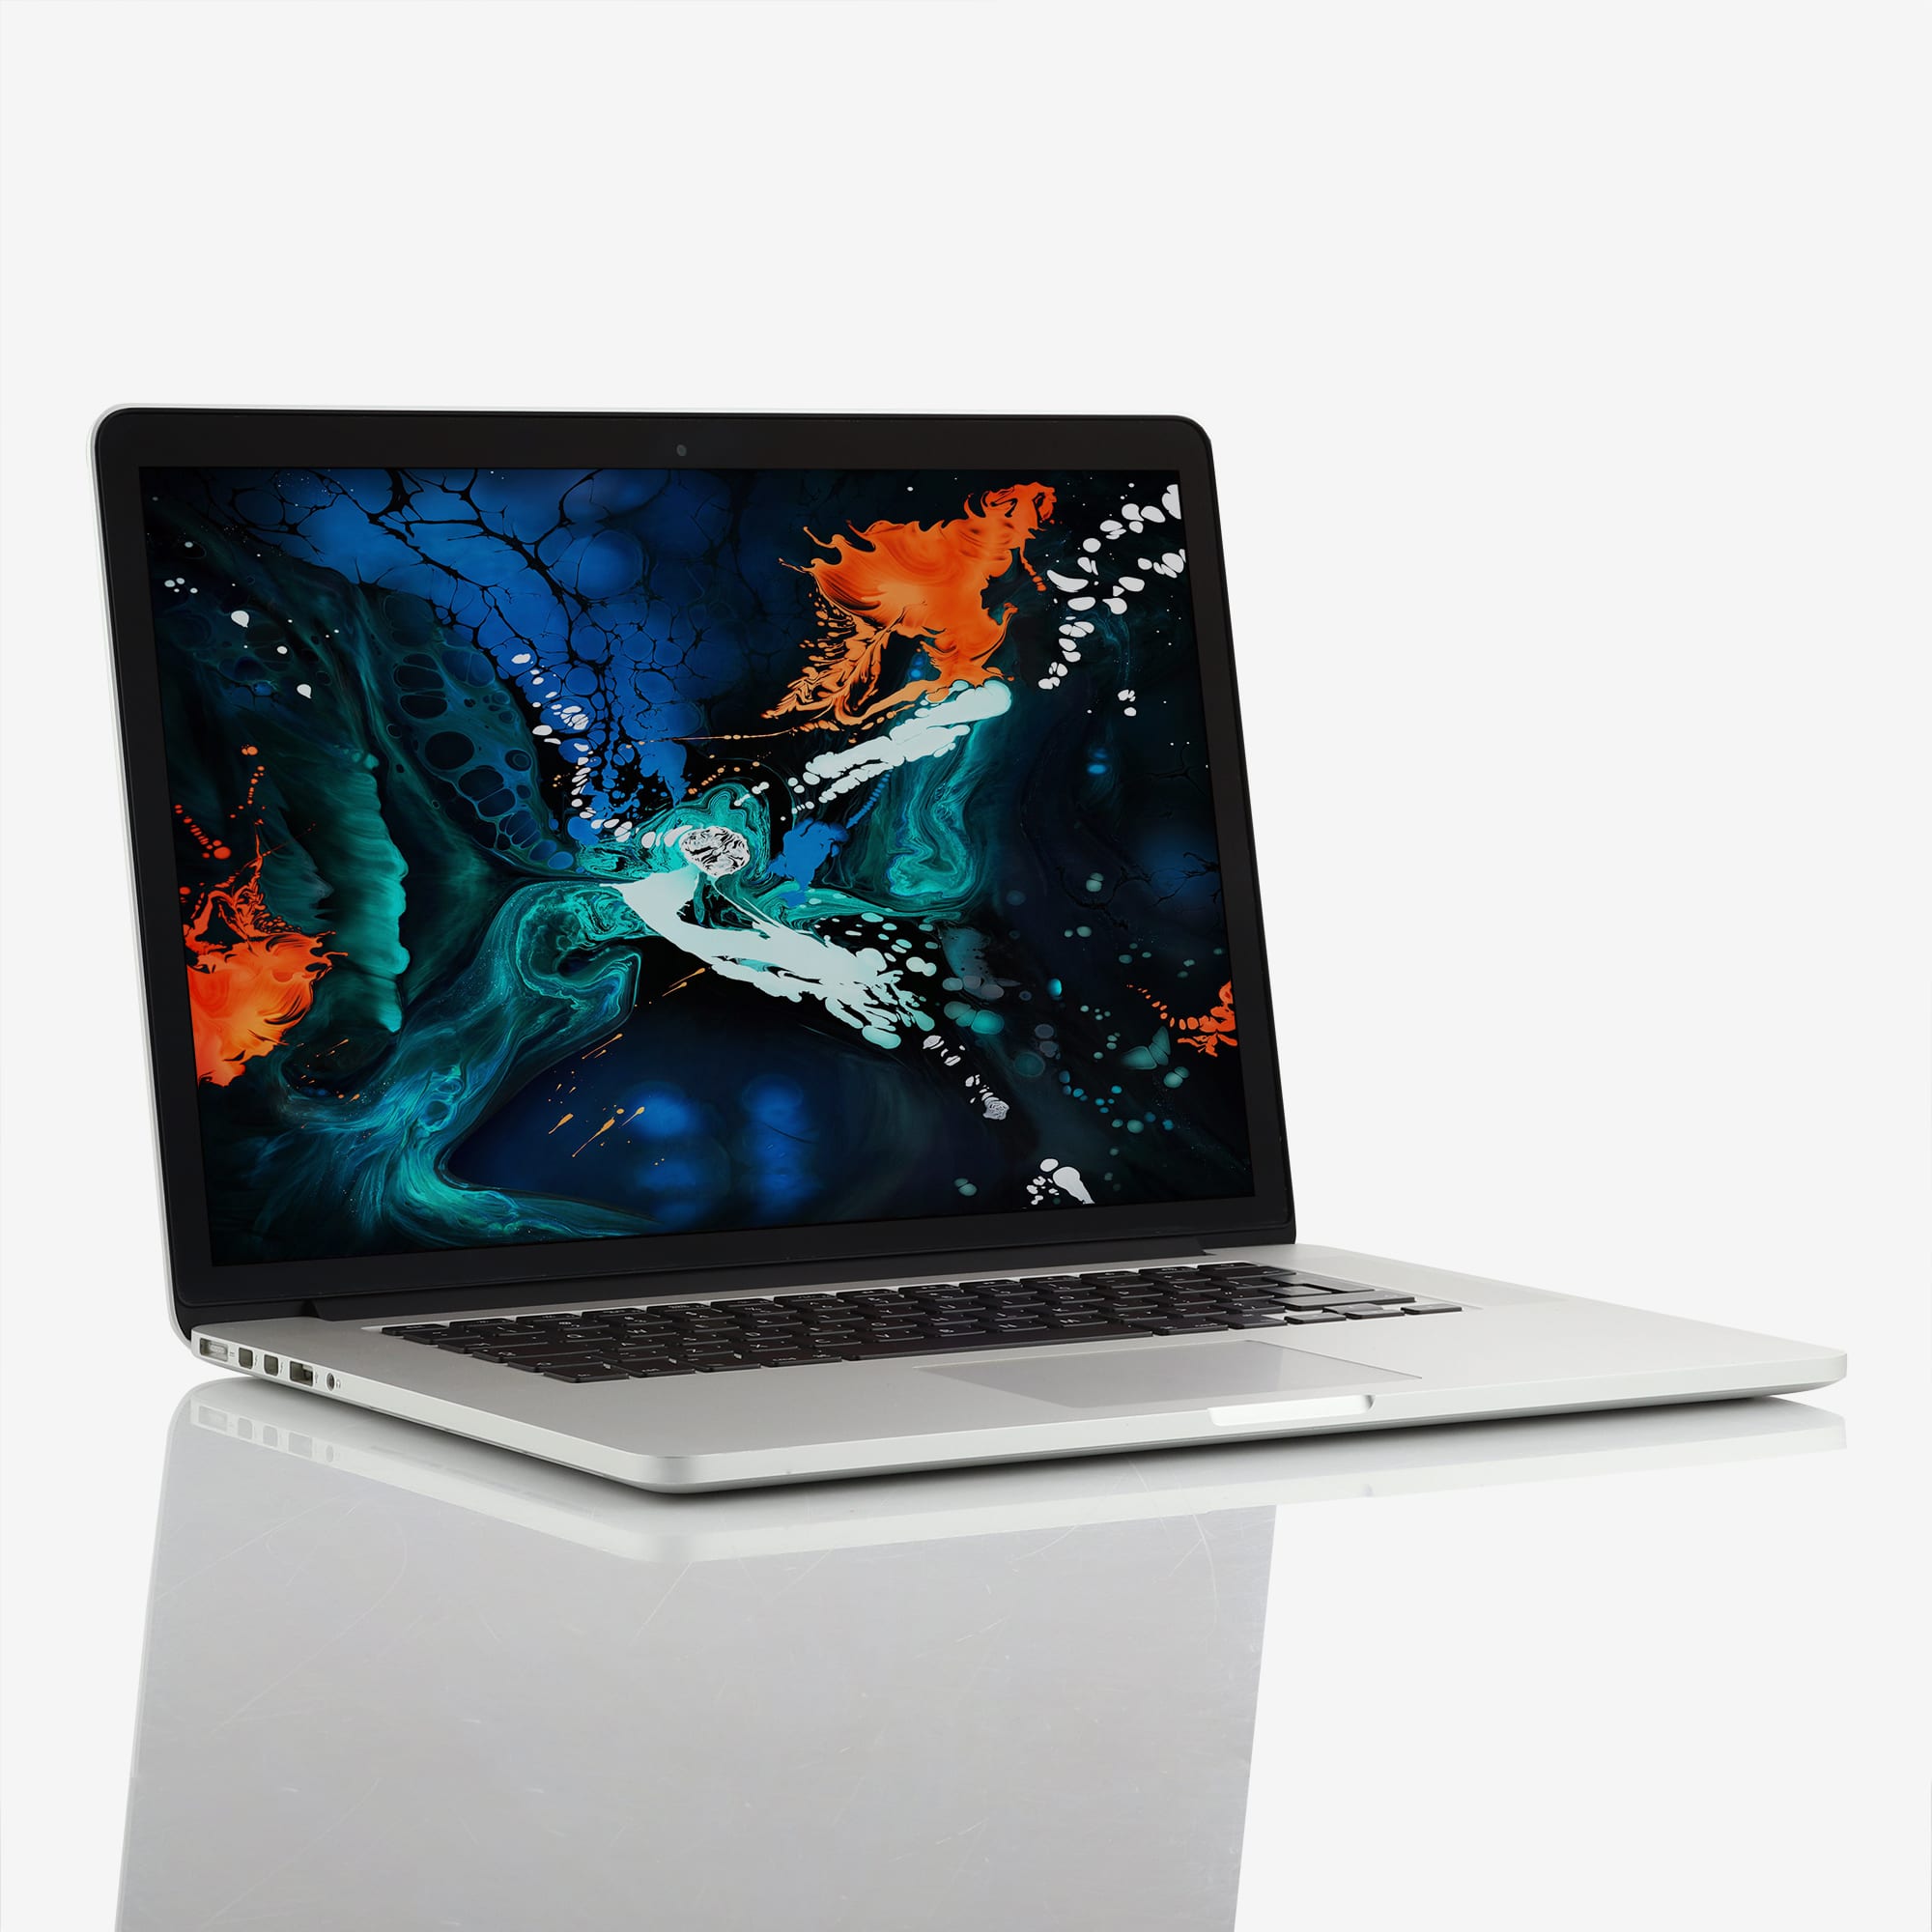 1 x Apple MacBook Pro Retina 15 Inch Quad Core i7 2.80 GHz (2015)